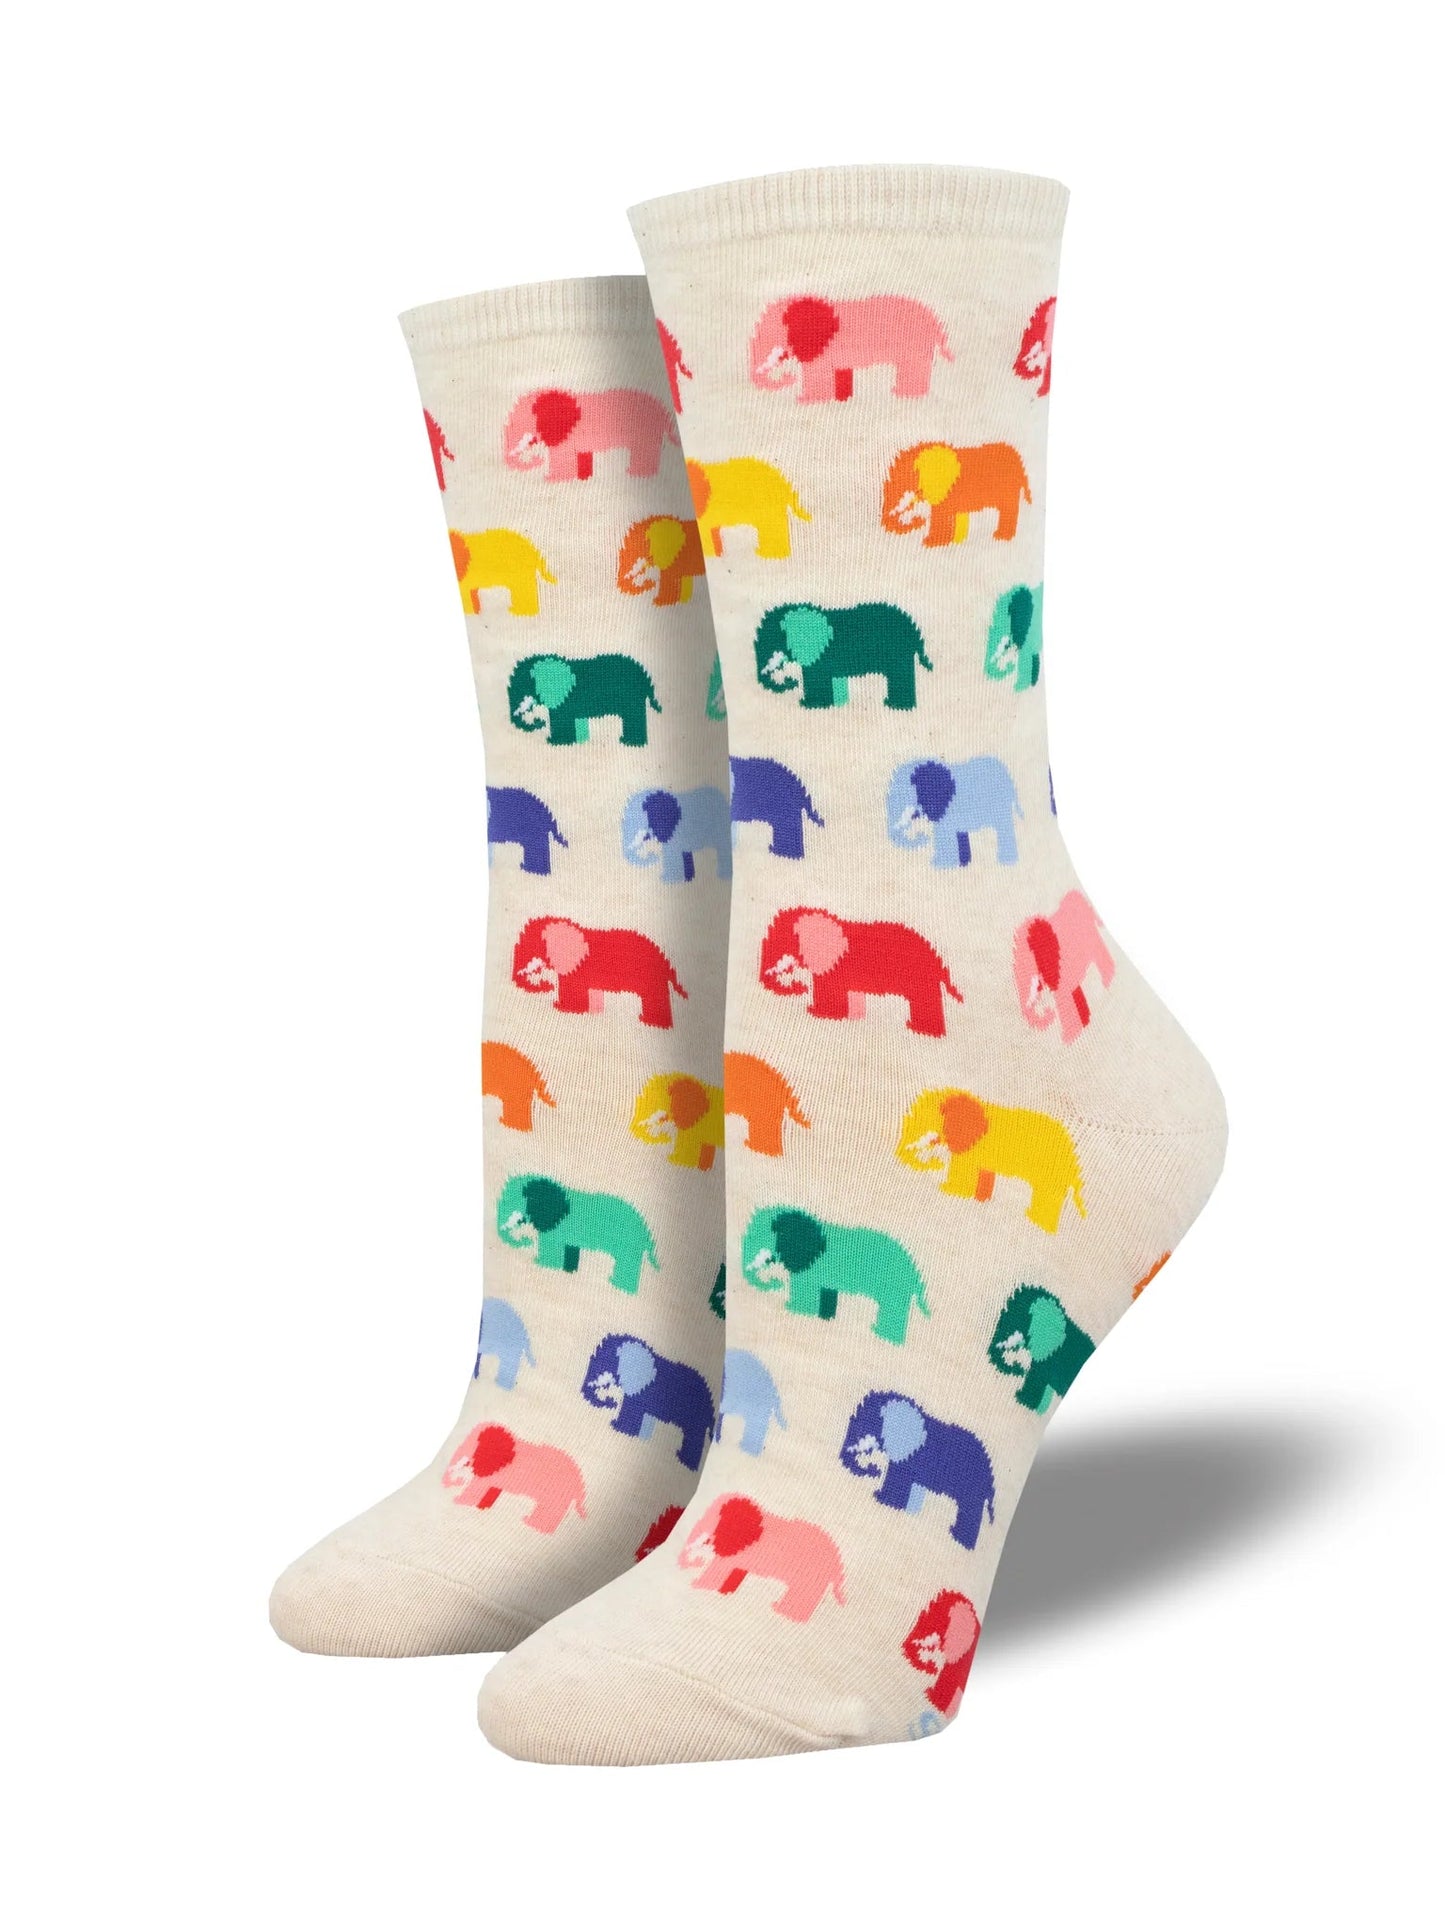 Elephant In The Room | Ivory Heather - Socks - Socksmith